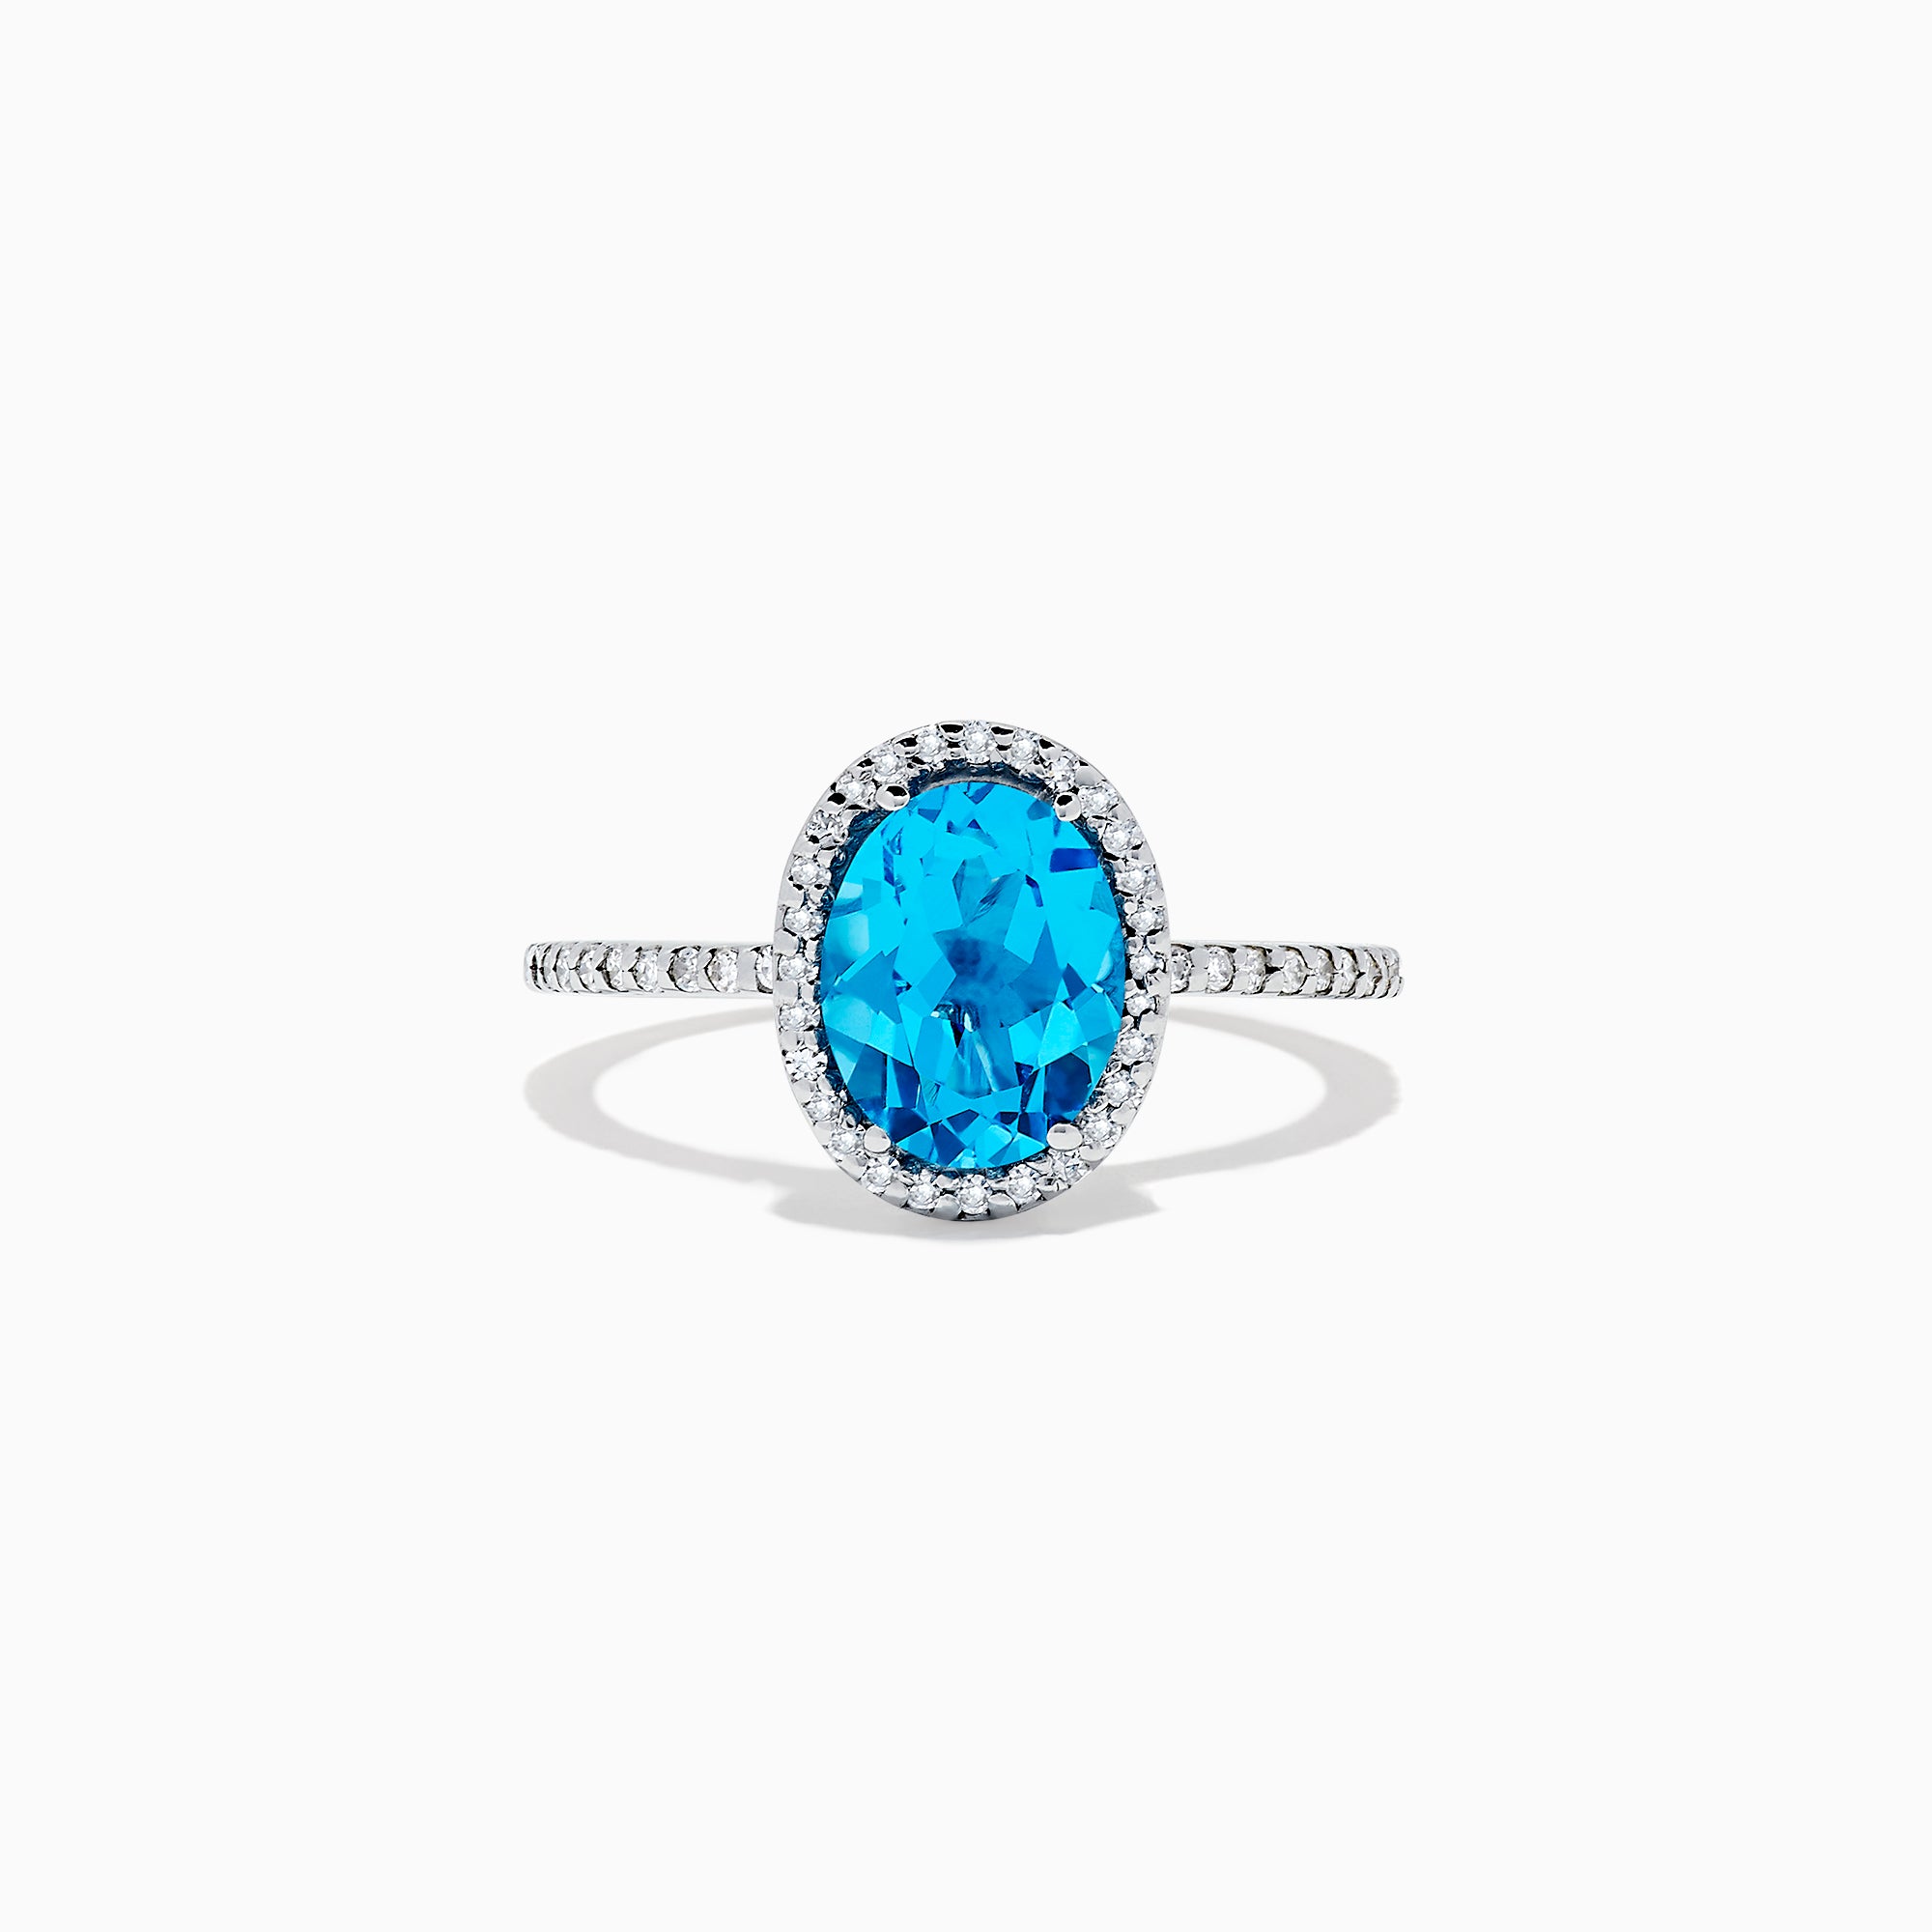 Effy Ocean Bleu 14K White Gold Blue Topaz and Diamond Ring, 2.51 TCW